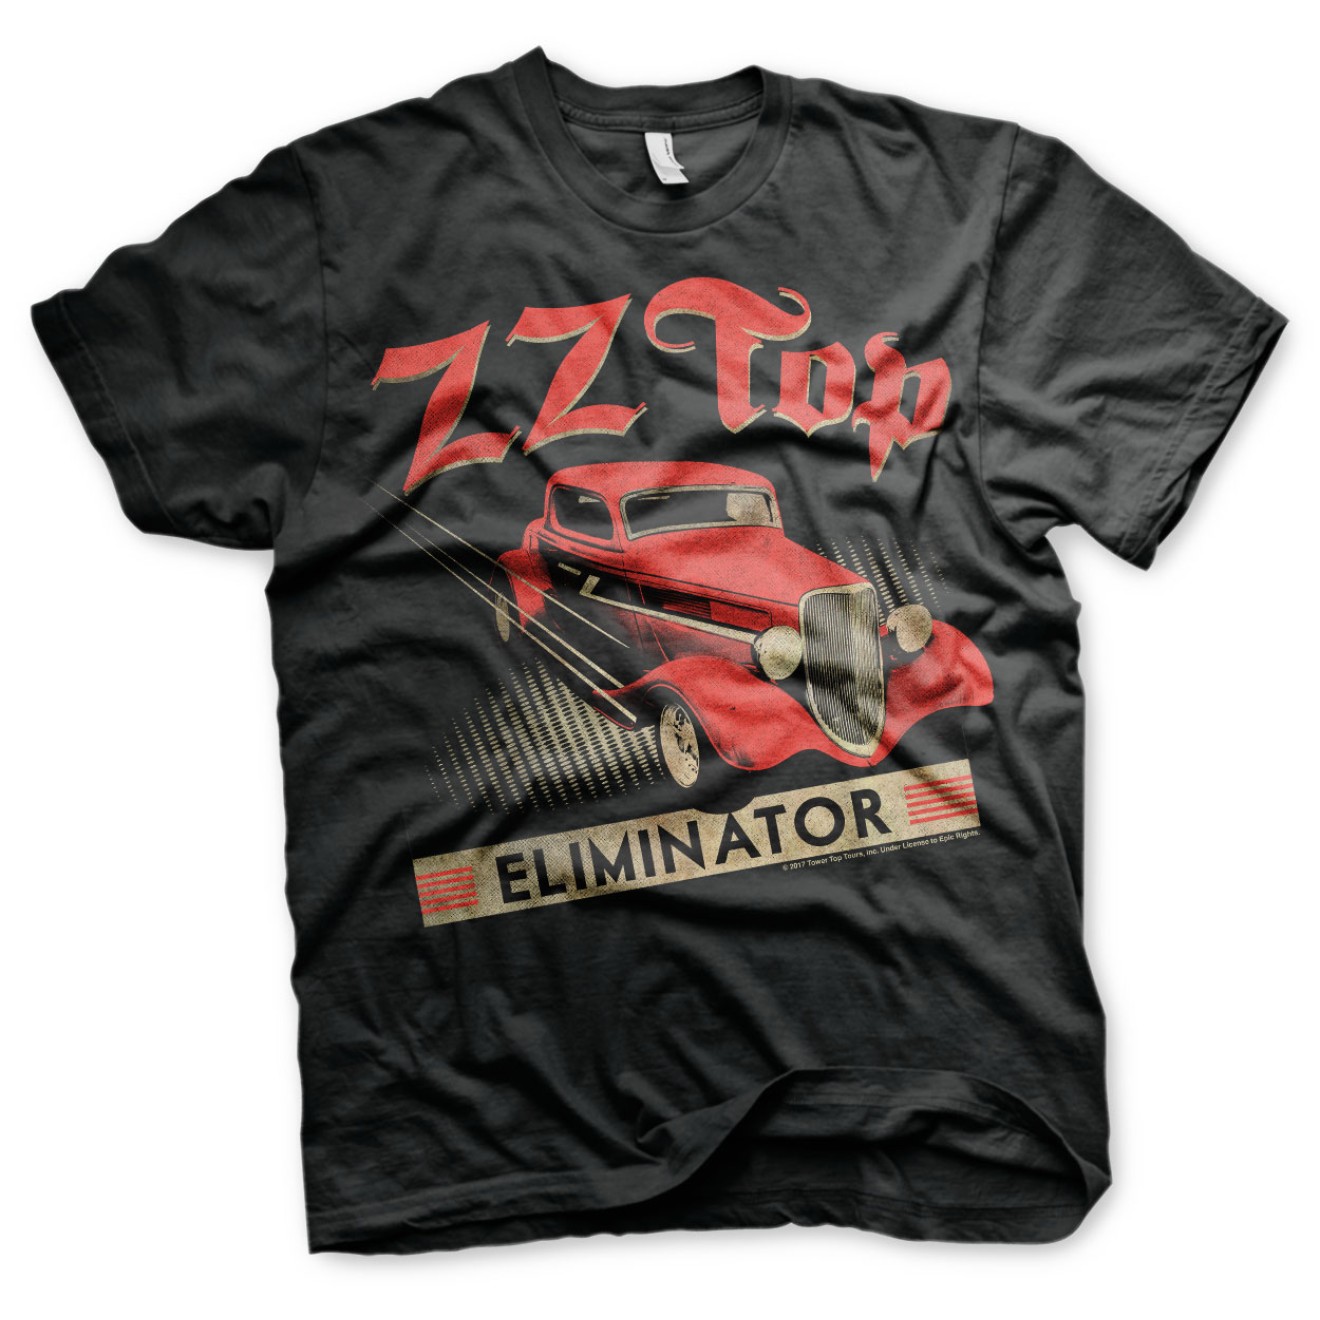 ZZ-TOP ELIMINATOR T-SHIRT